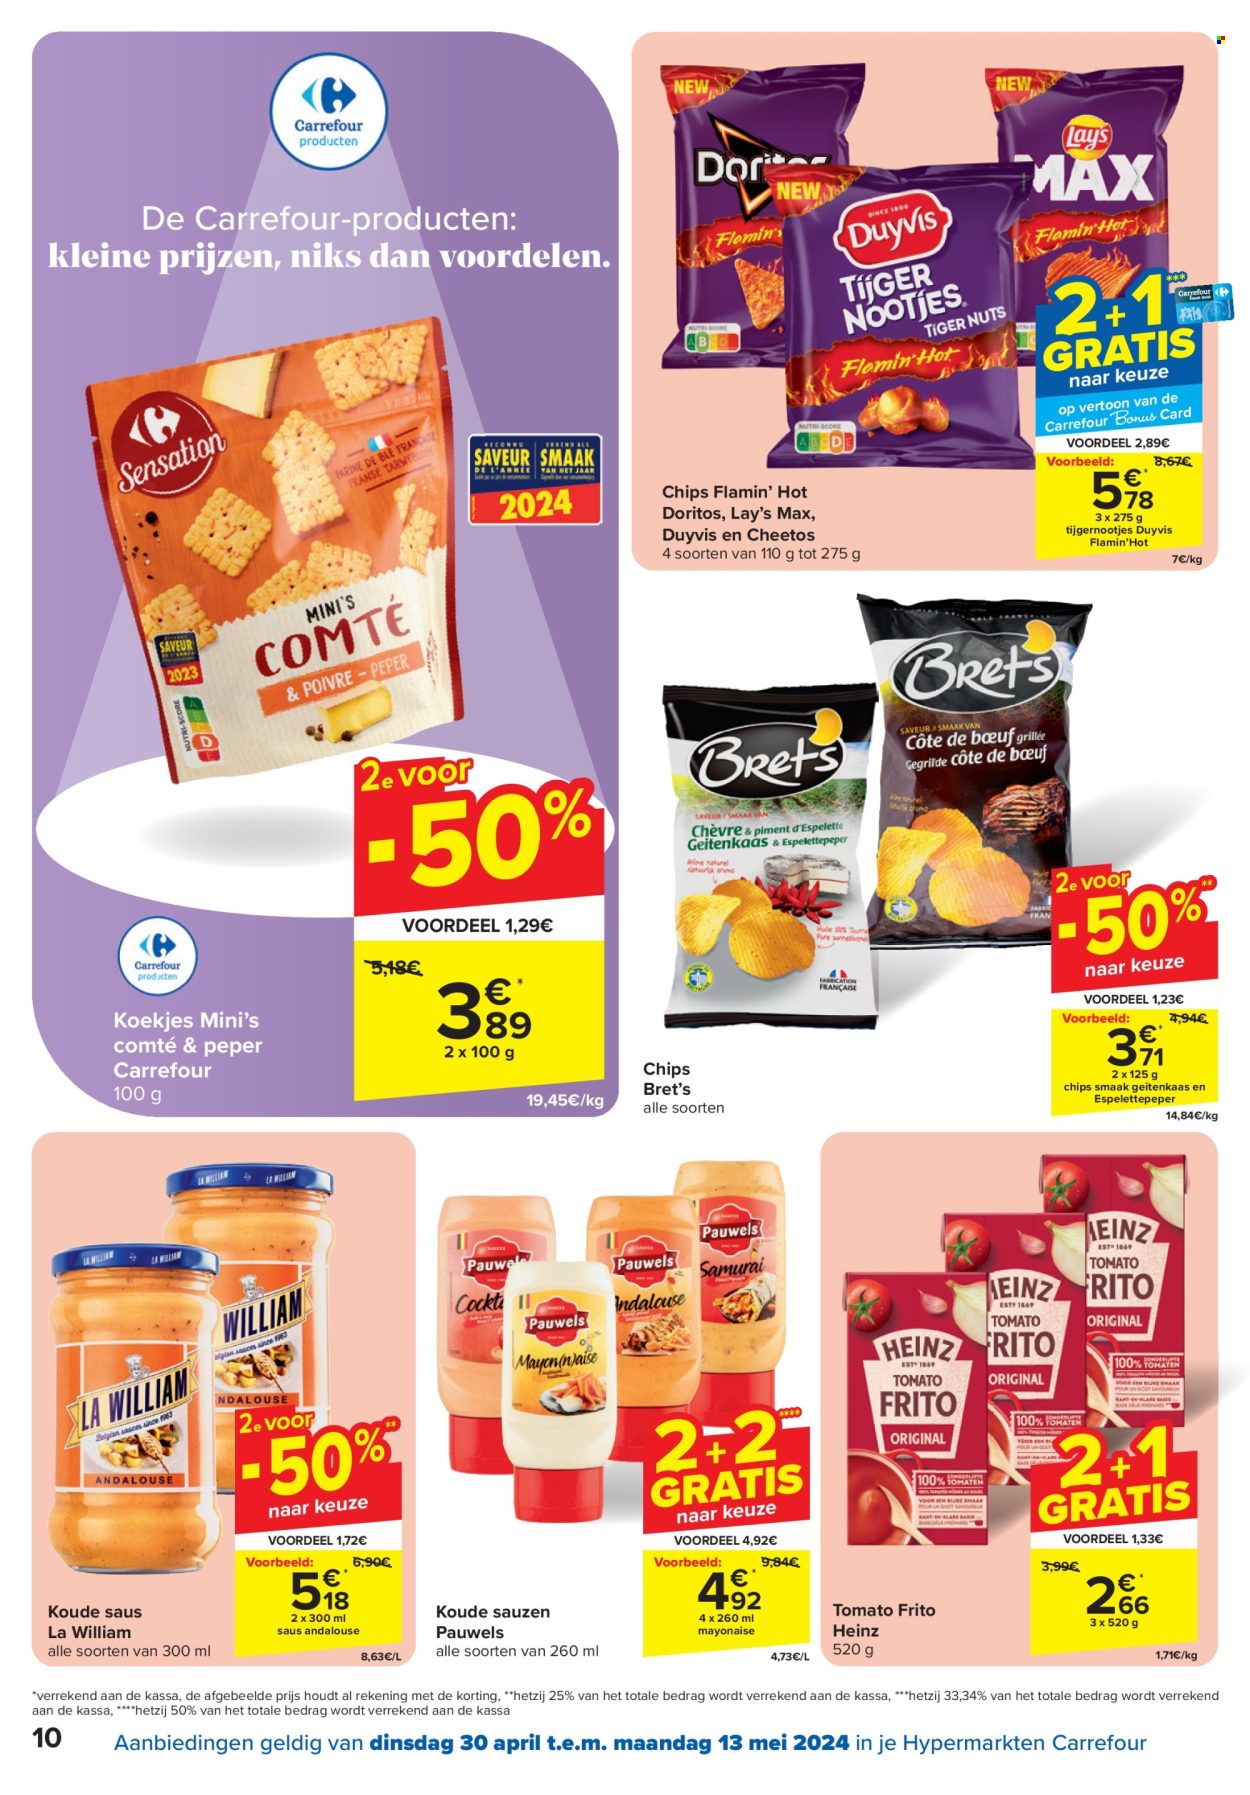 thumbnail - Catalogue Carrefour hypermarkt - 30/04/2024 - 13/05/2024 - Produits soldés - fromage, chips, Lay’s, Doritos, Heinz. Page 10.